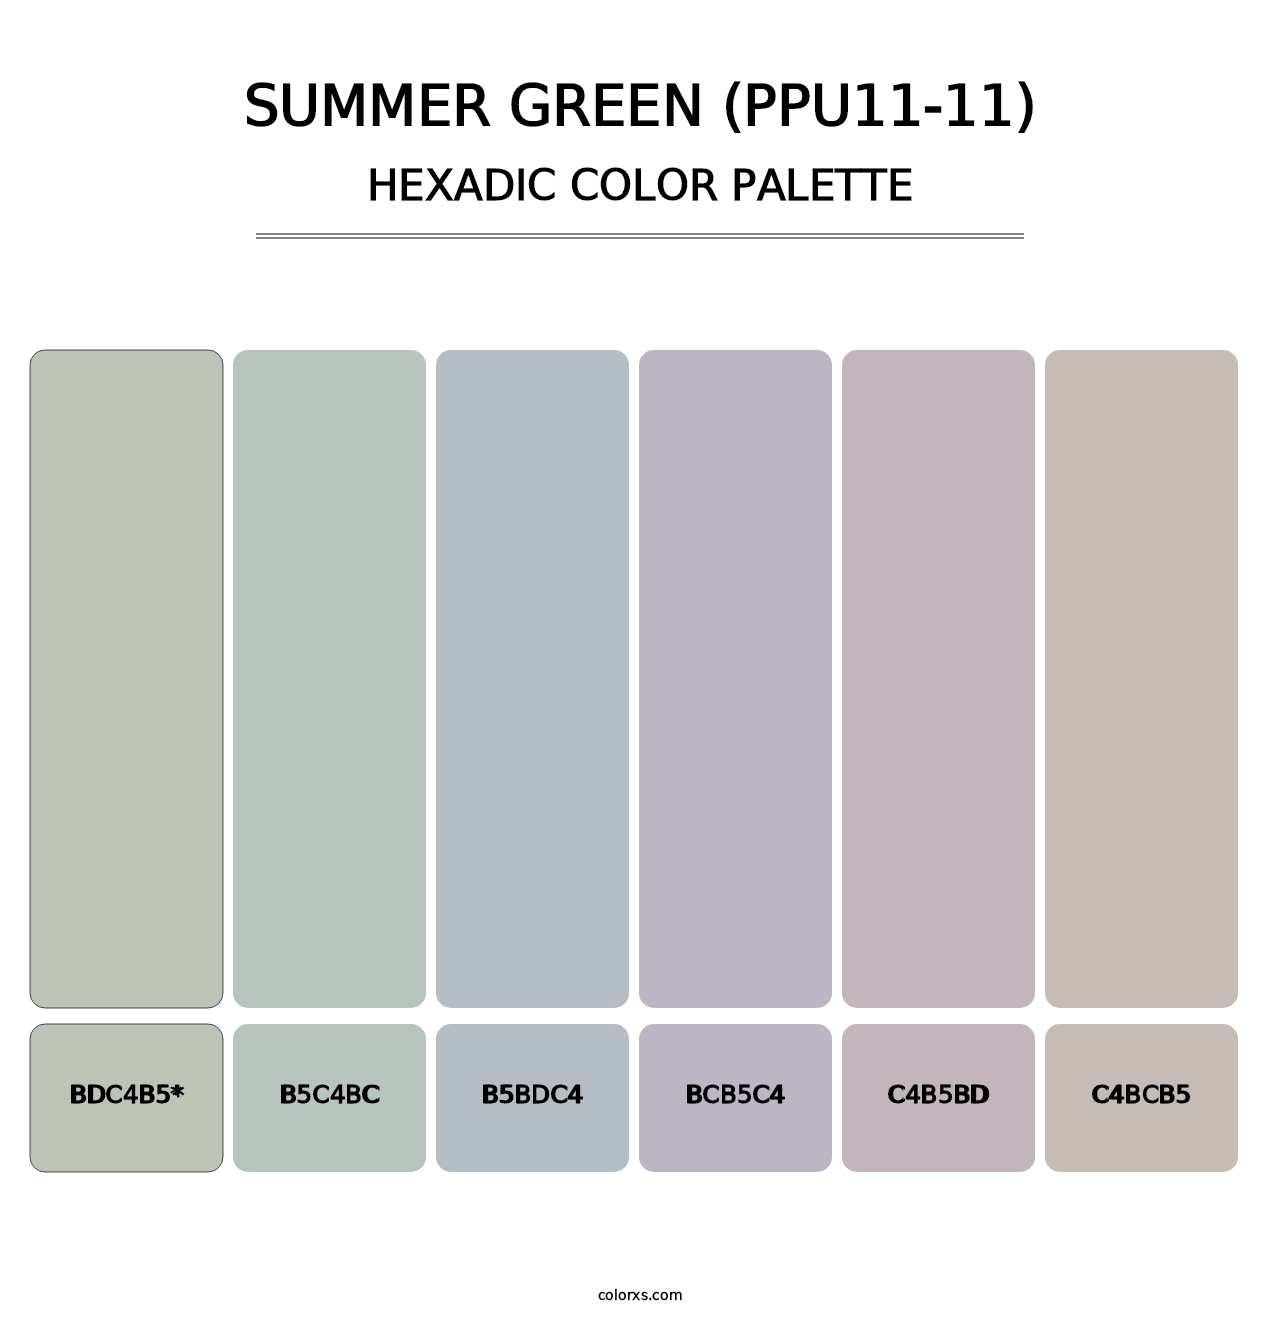 Summer Green (PPU11-11) - Hexadic Color Palette